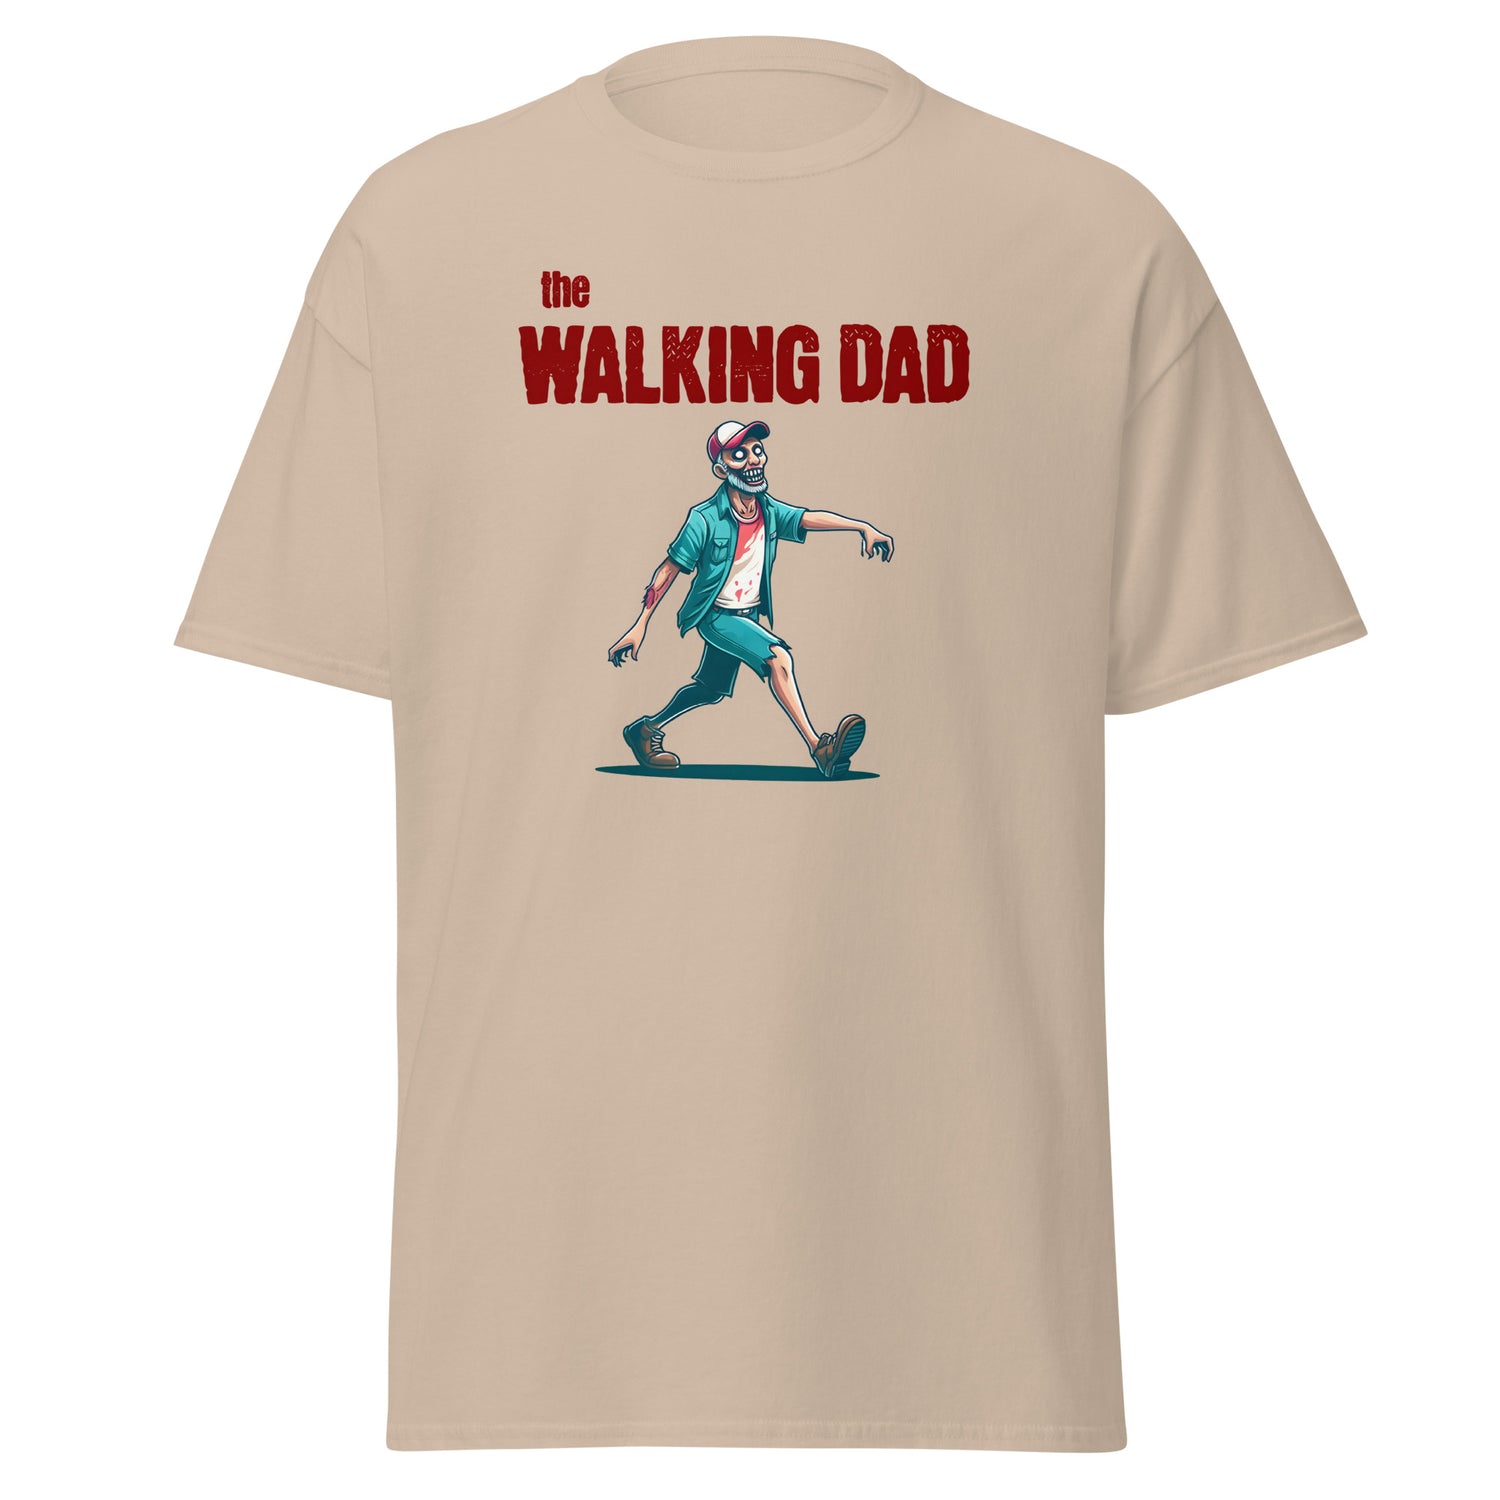 The Walking Dad: Humor-Filled Zombie Dad Tee